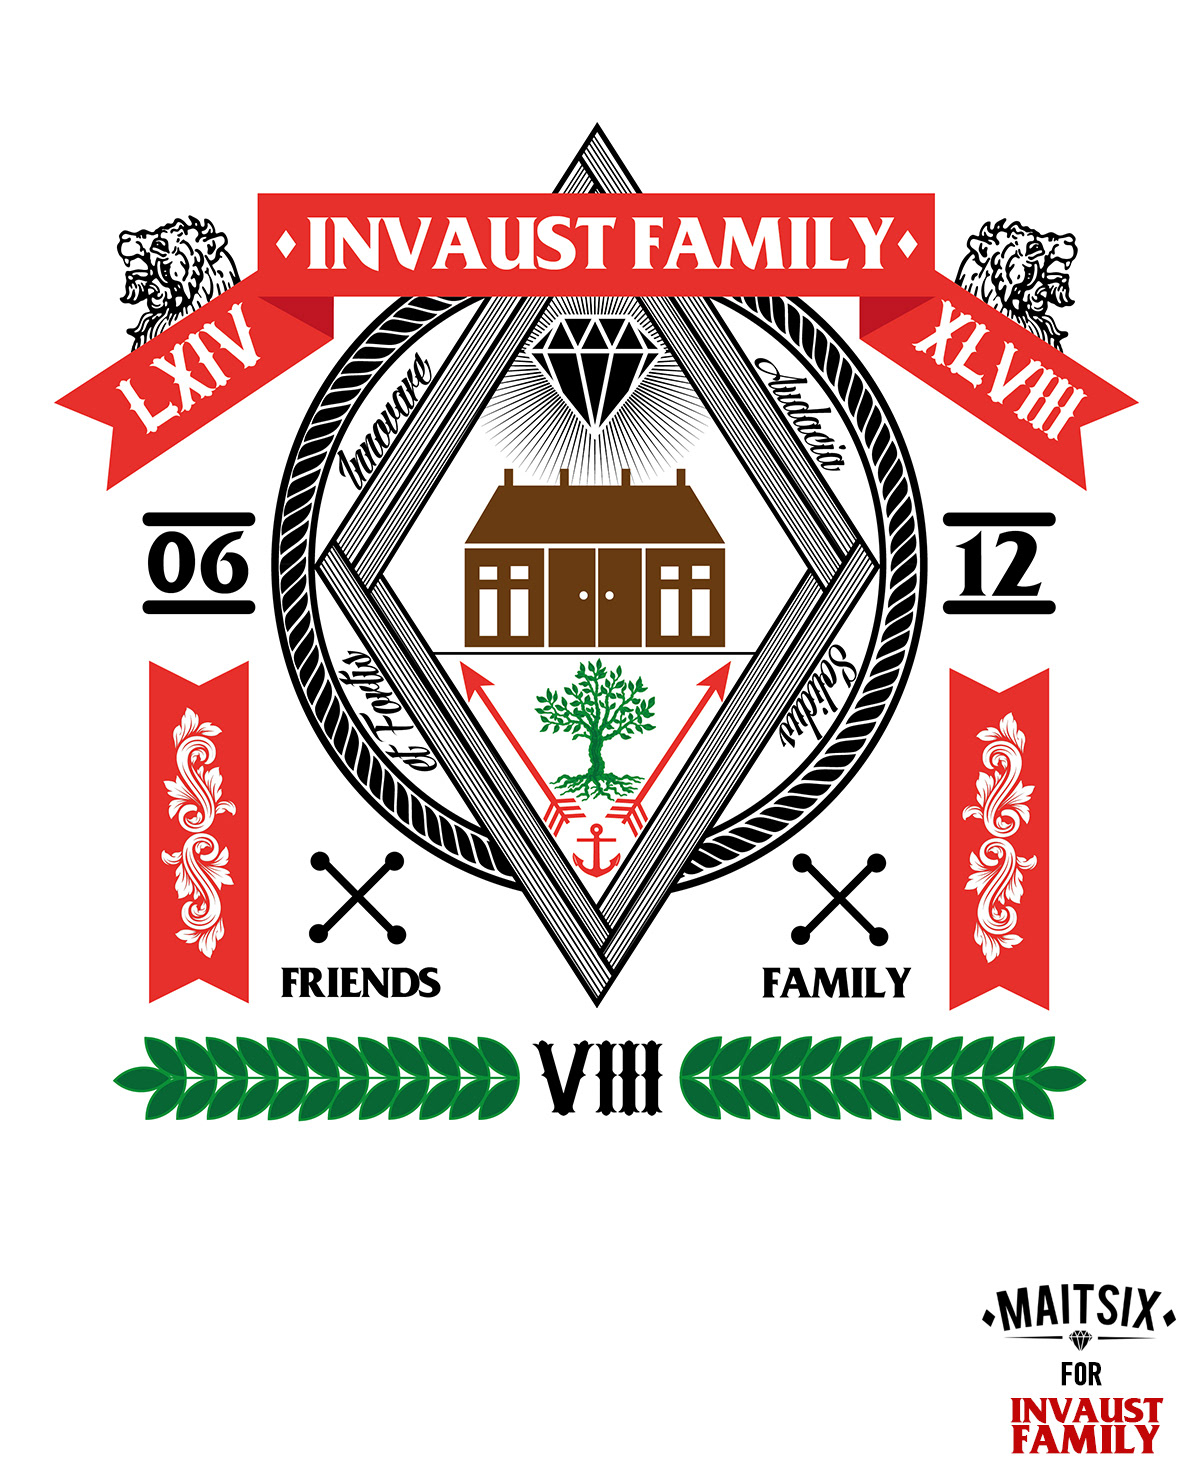 Invaust family artwork t-shirt graphic